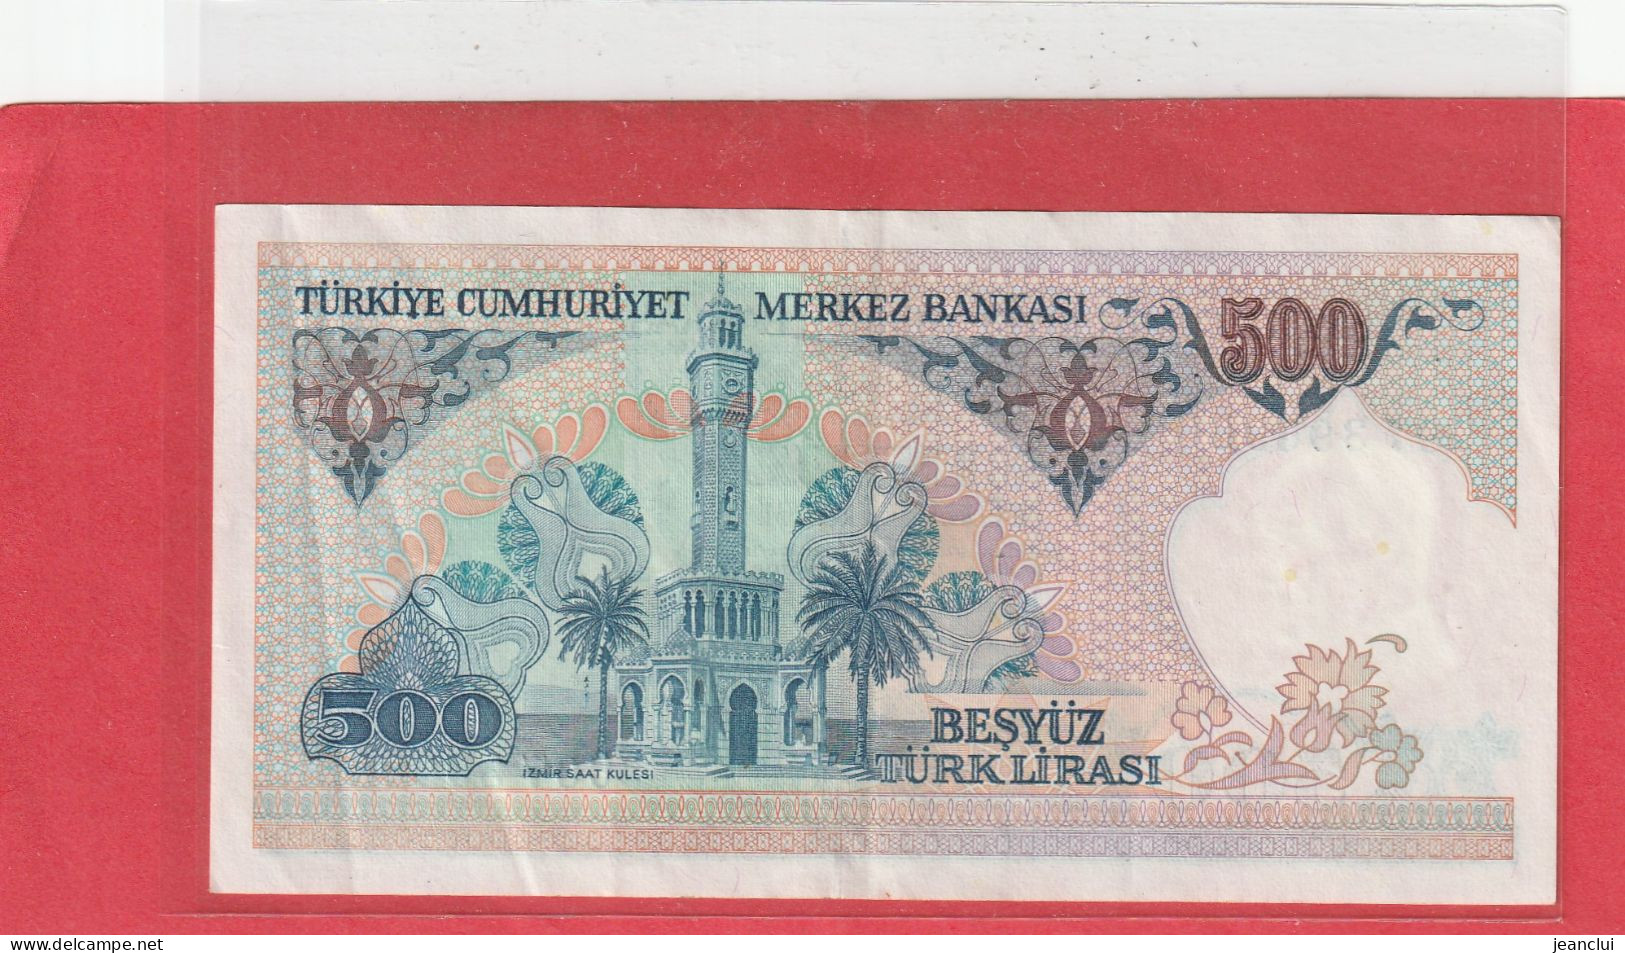 TURKIYE CUMHURIYET MERKEZ BANKASI . 500 LIRA . 14 OCAK 1970  . N°  C 07396966 .  2 SCANNES  .  BEL ETAT - Türkei